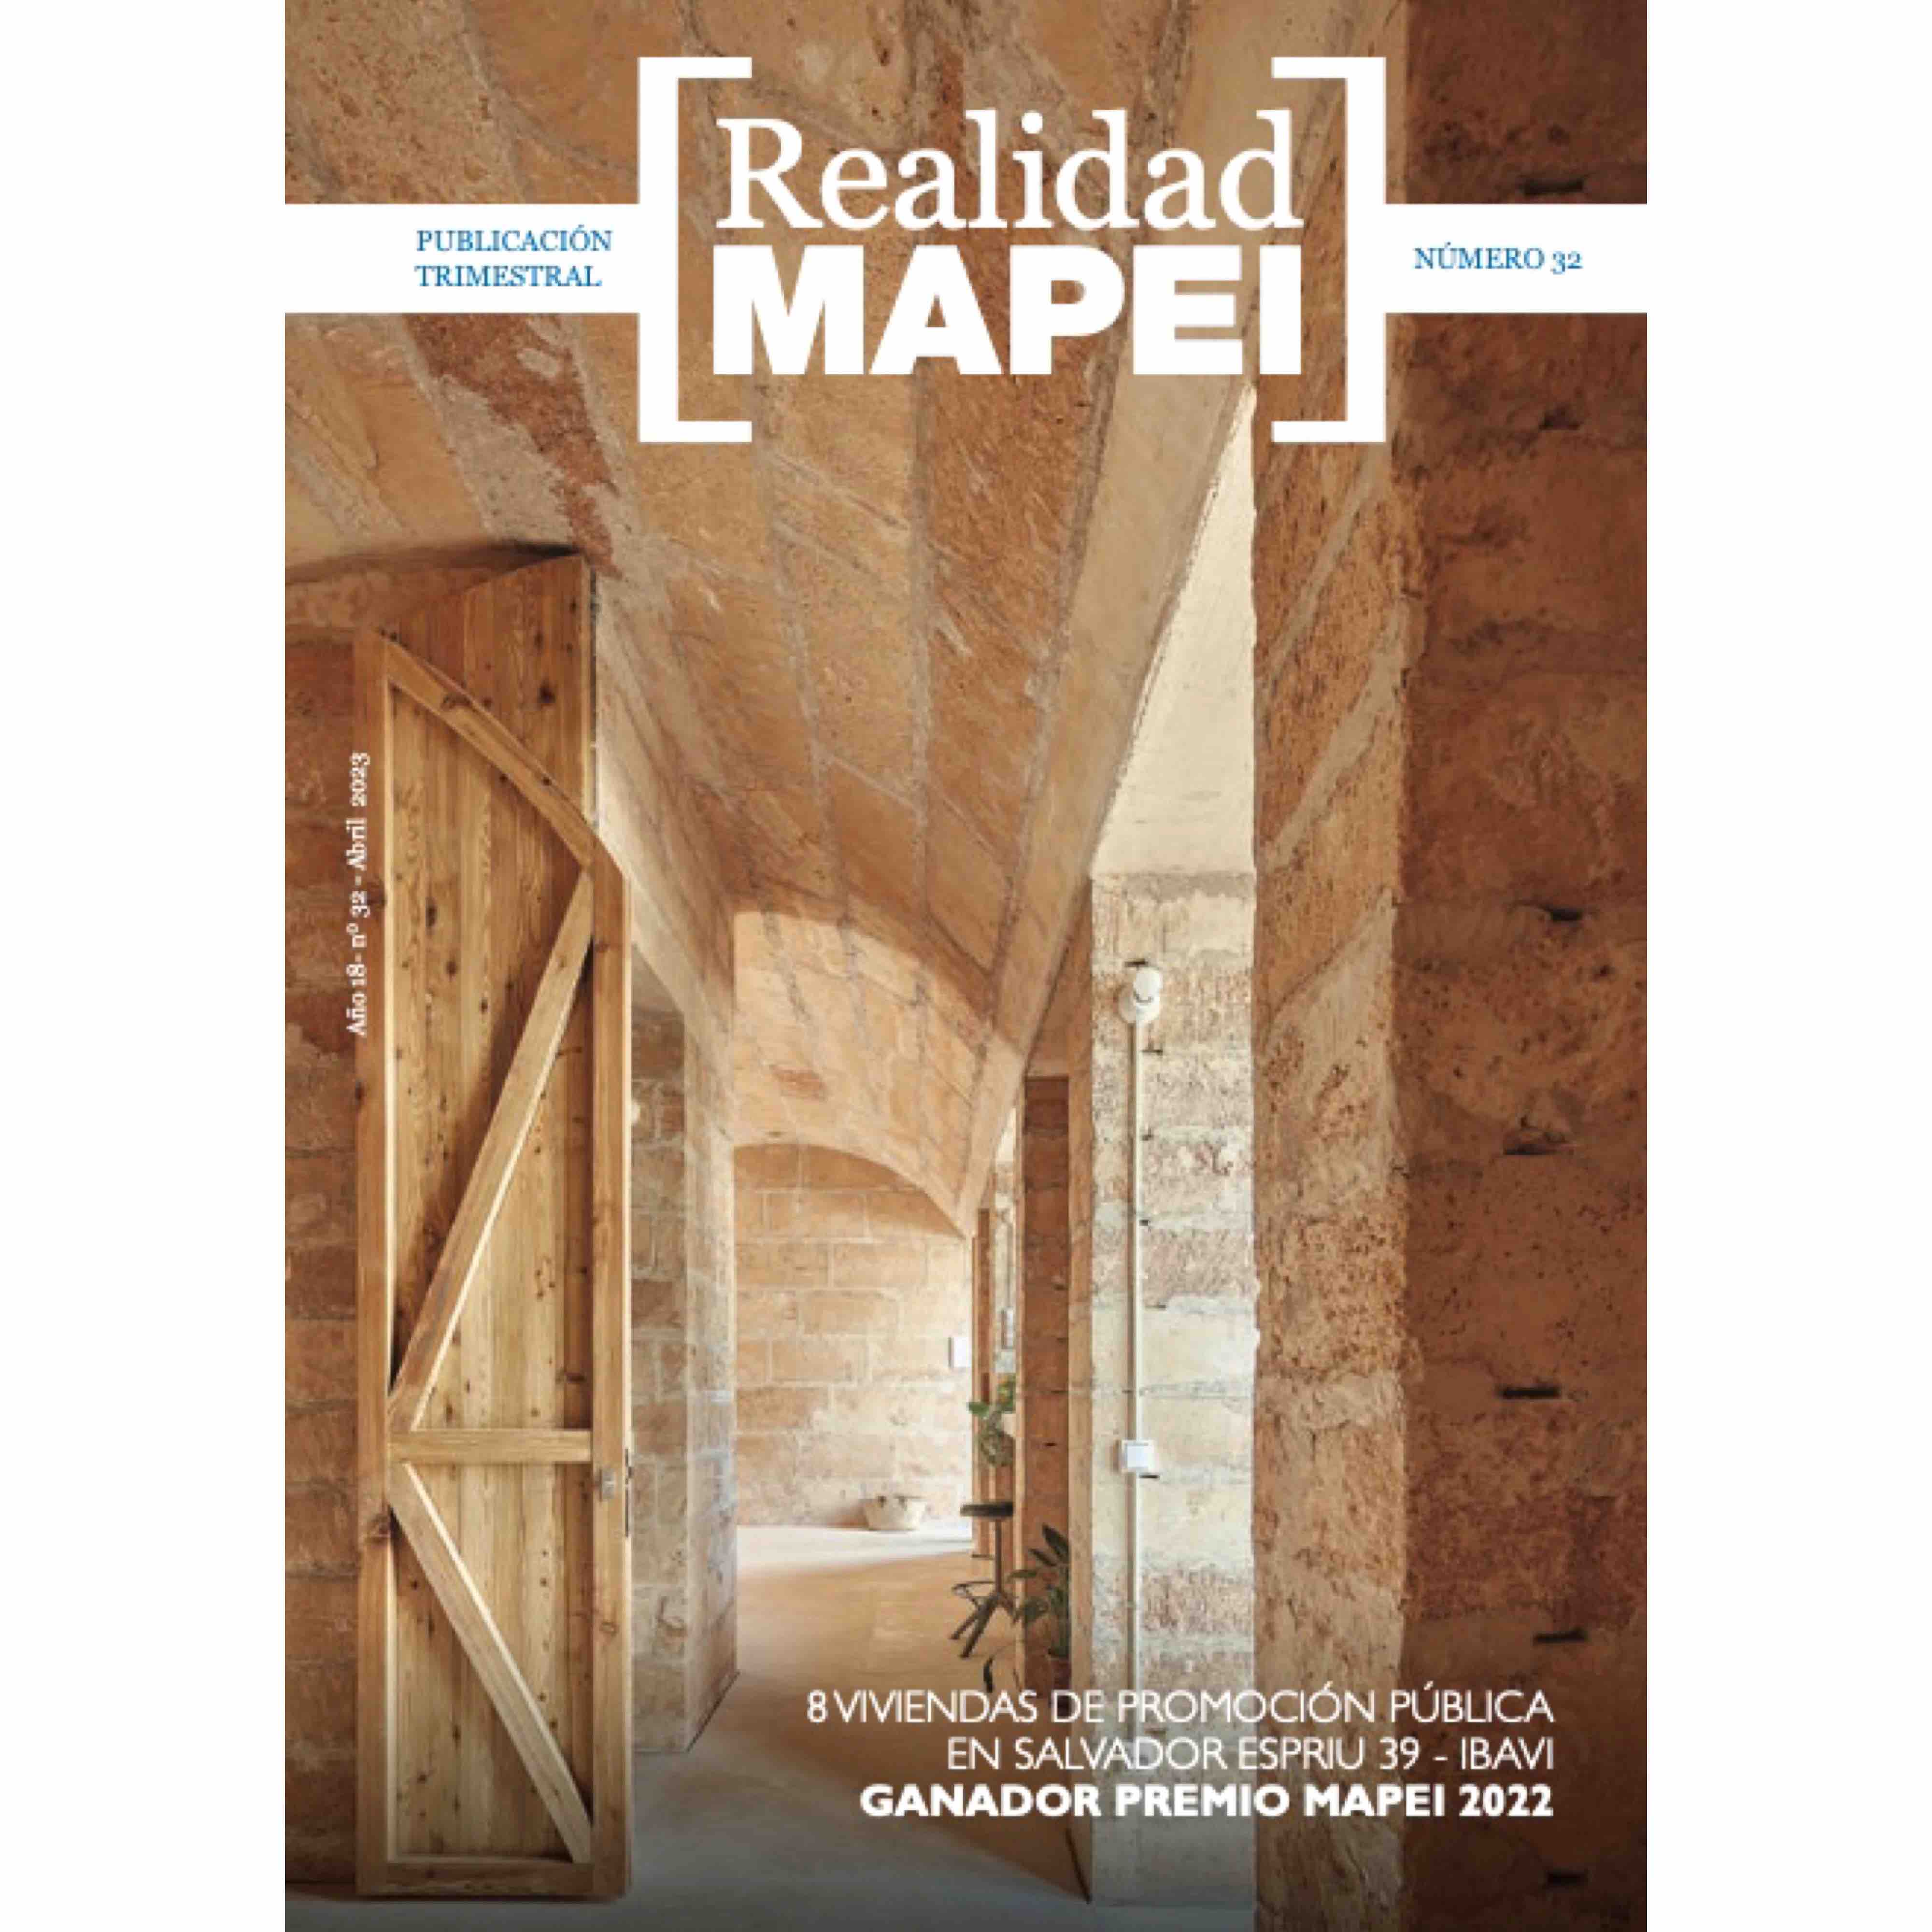 Publicada “Realidad Mapei 32” especial Premio Mapei 2022